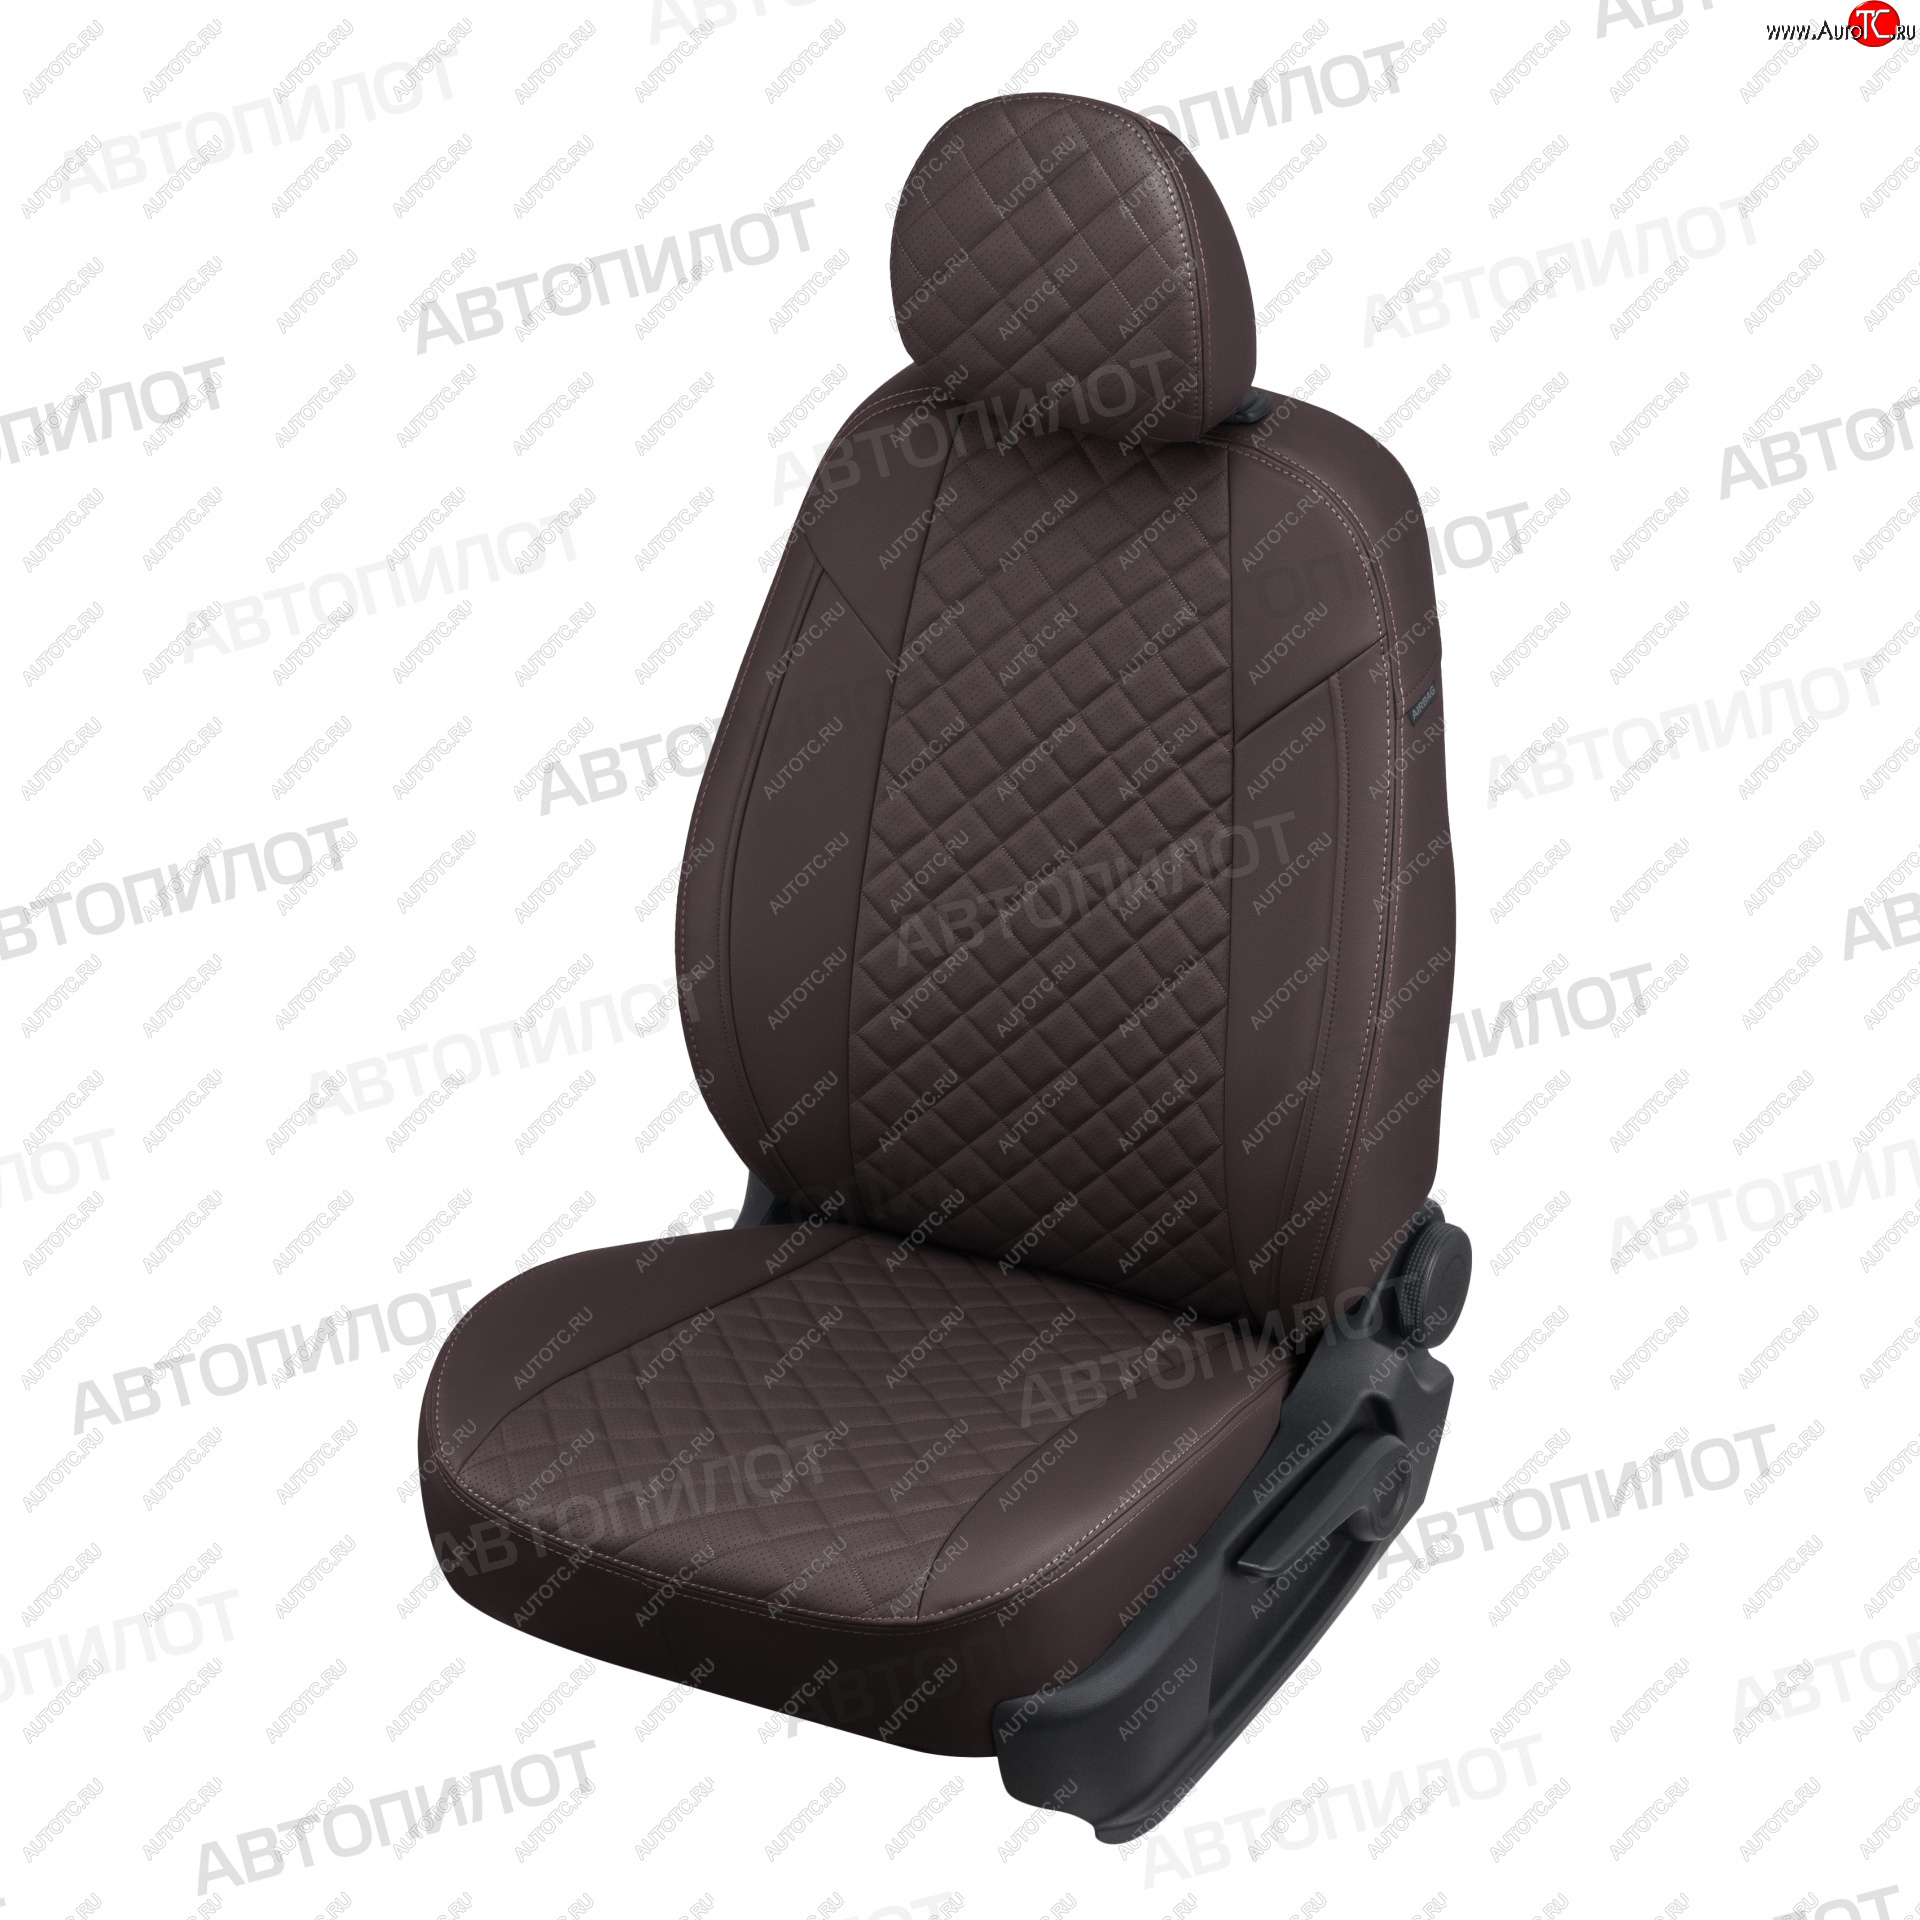 7 799 р. Чехлы сидений (экокожа) Автопилот Ромб  Ford Fusion  1 (2002-2012) (шоколад)